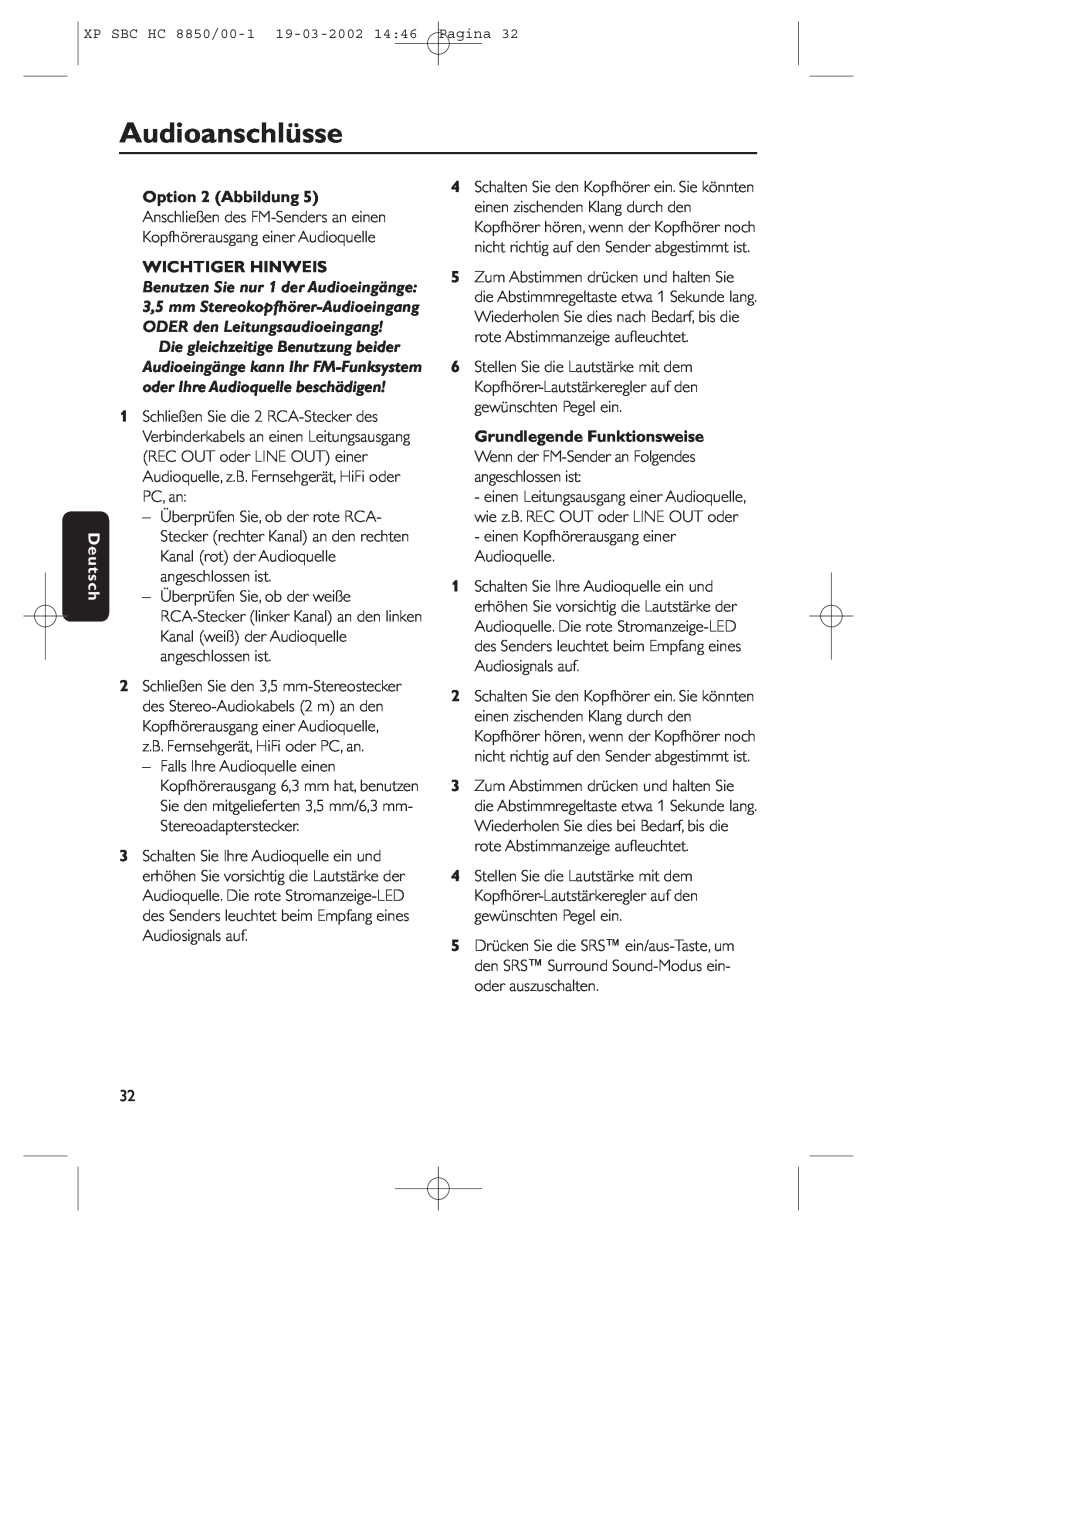 Philips HC8850 manual Audioanschlüsse, Deutsch, Option 2 Abbildung, Wichtiger Hinweis 